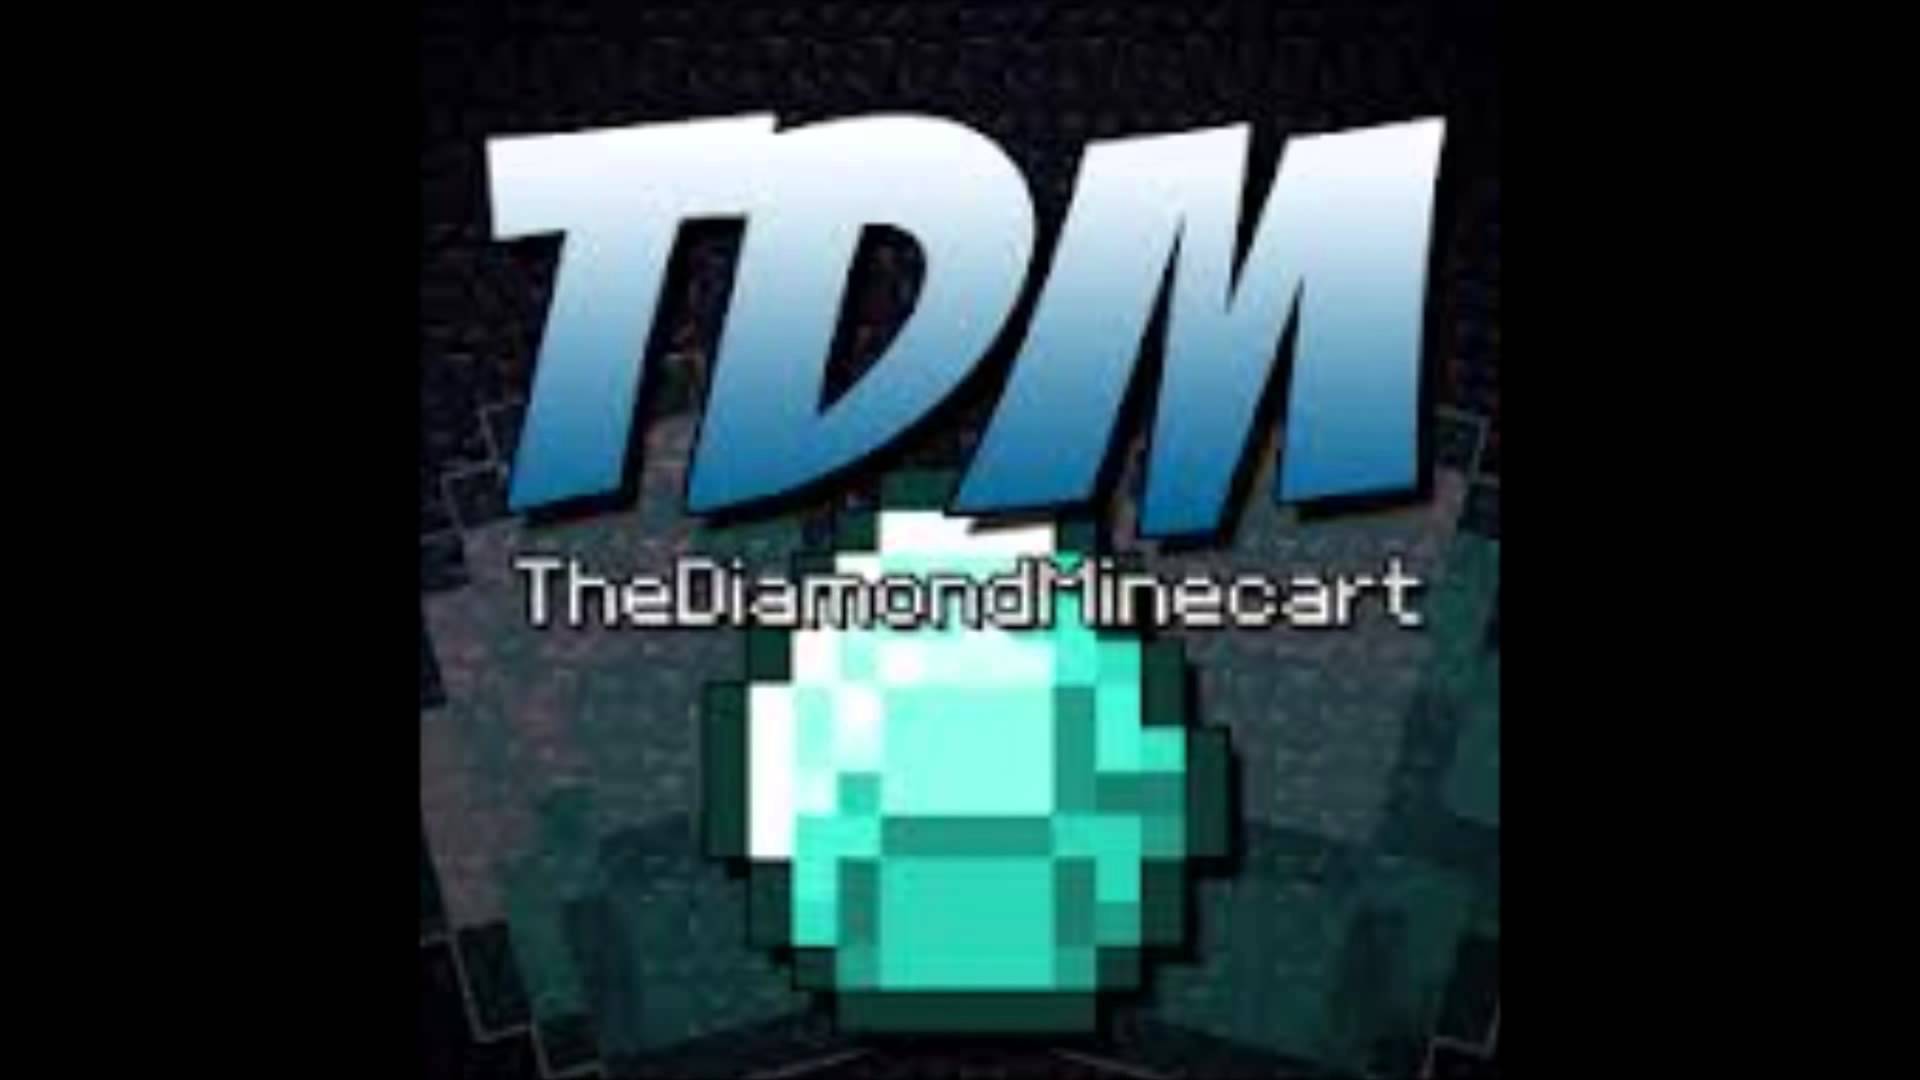 Thediamondminecart Dantdm Intro Song